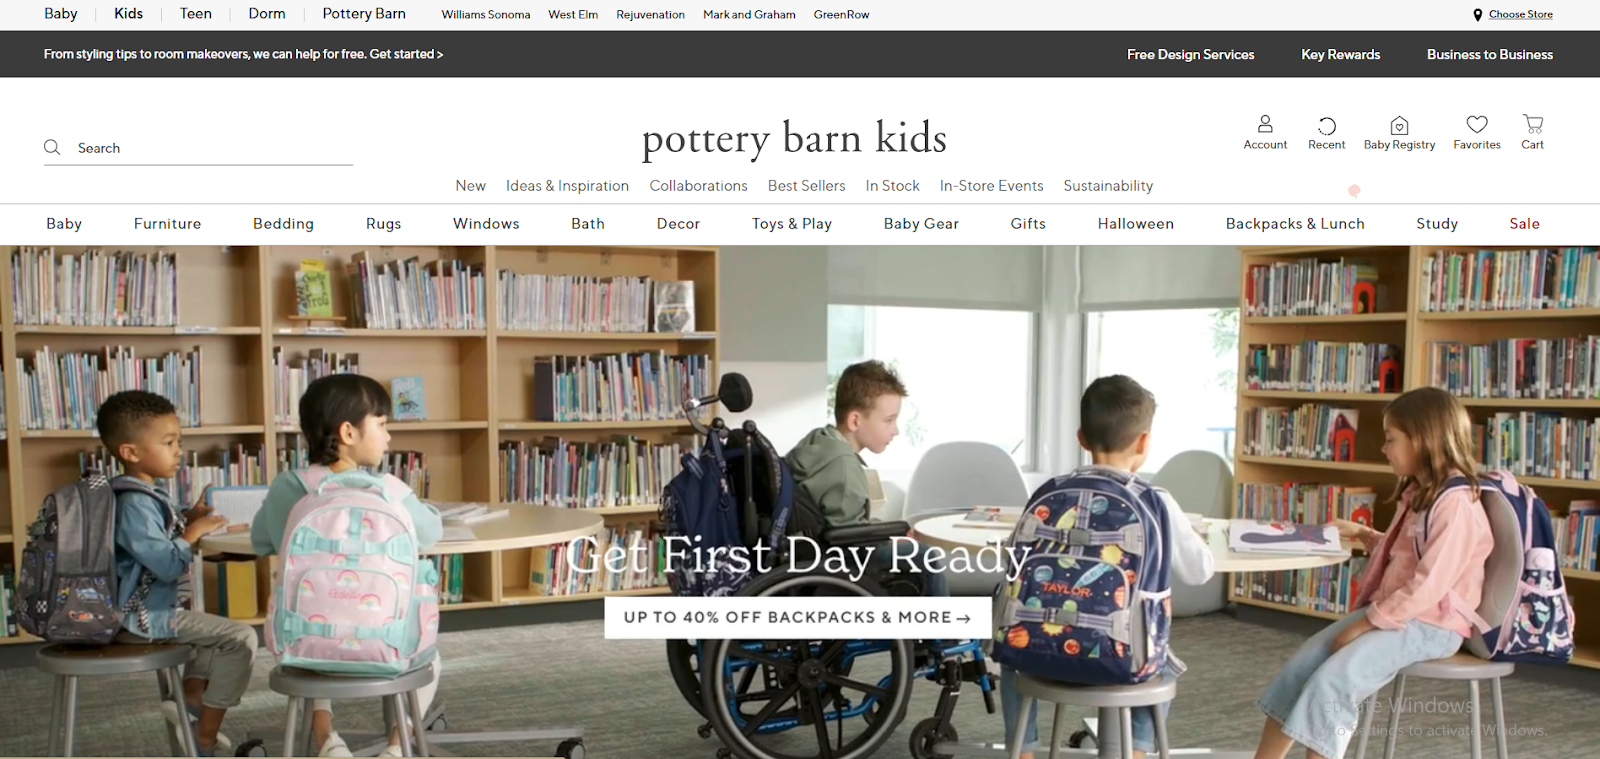 Pottery Barn Kids home page.